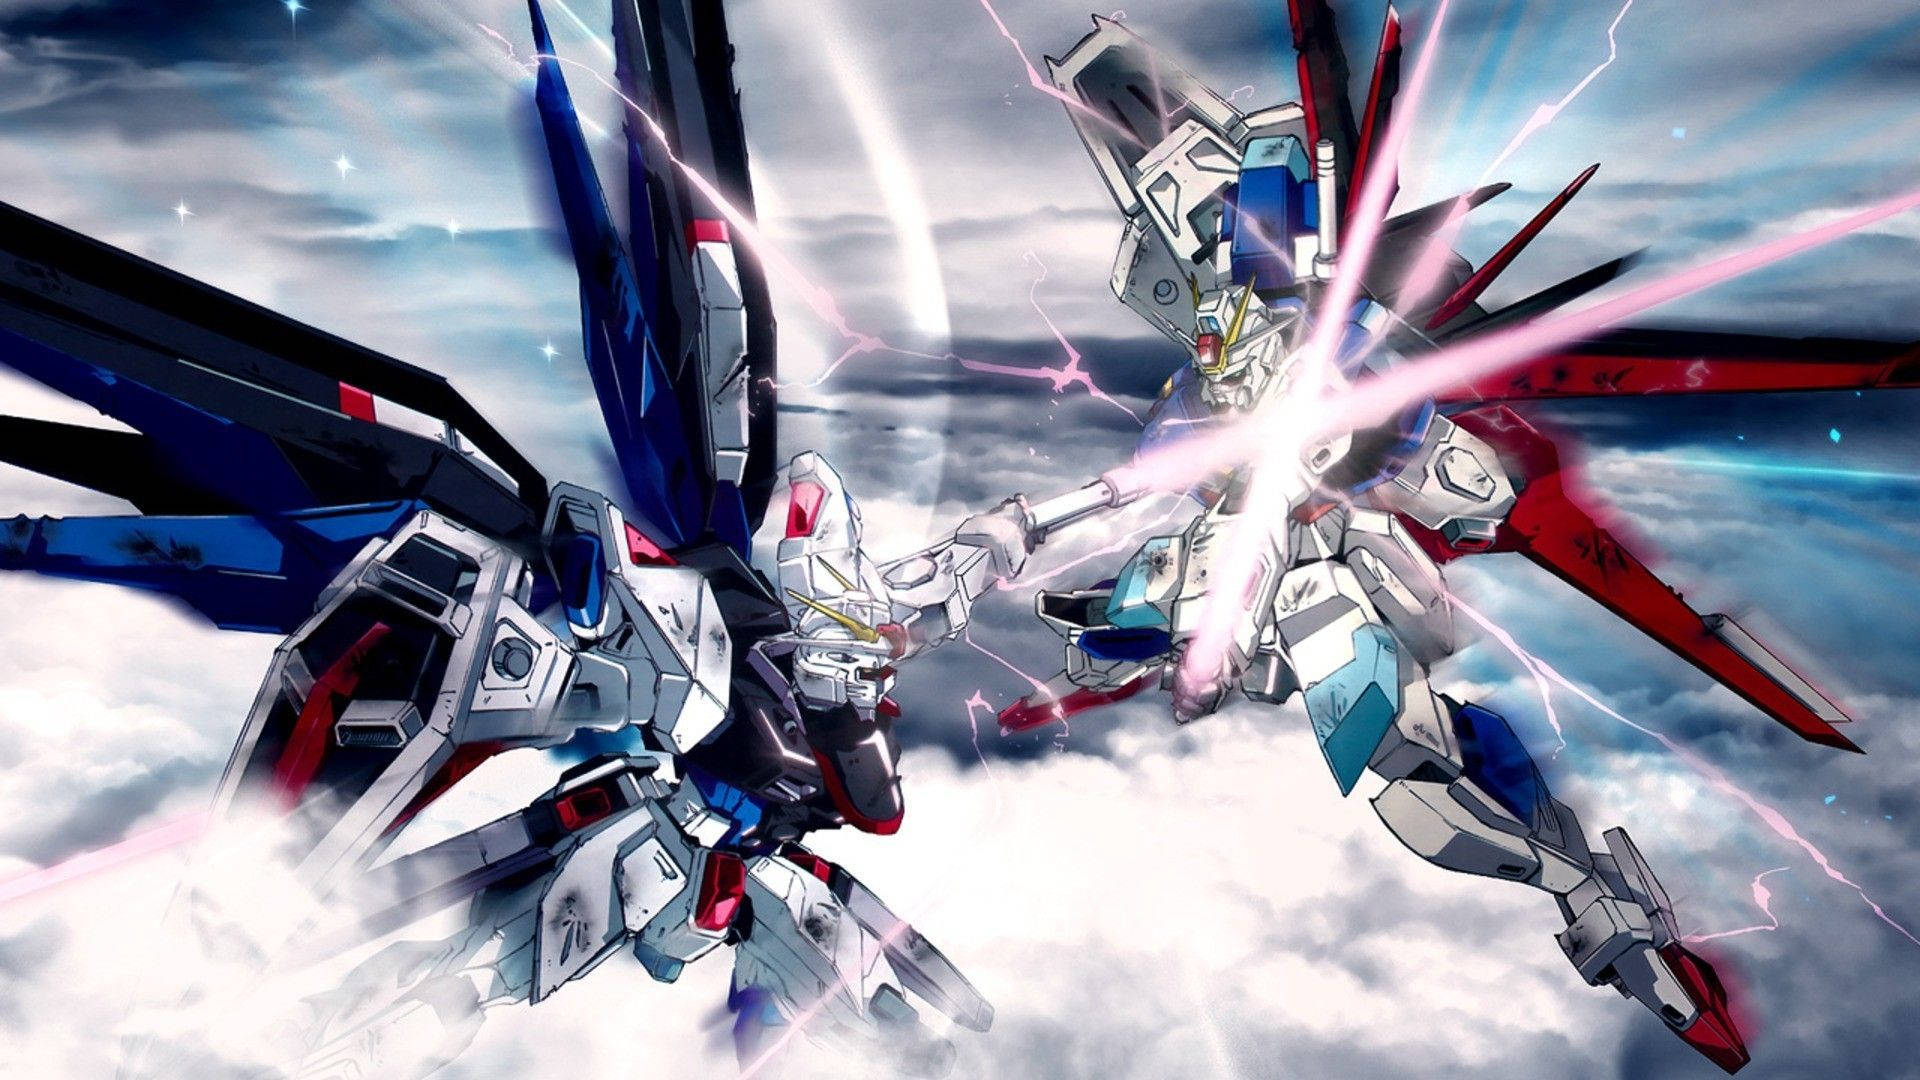 Cool Gundam Battle Background